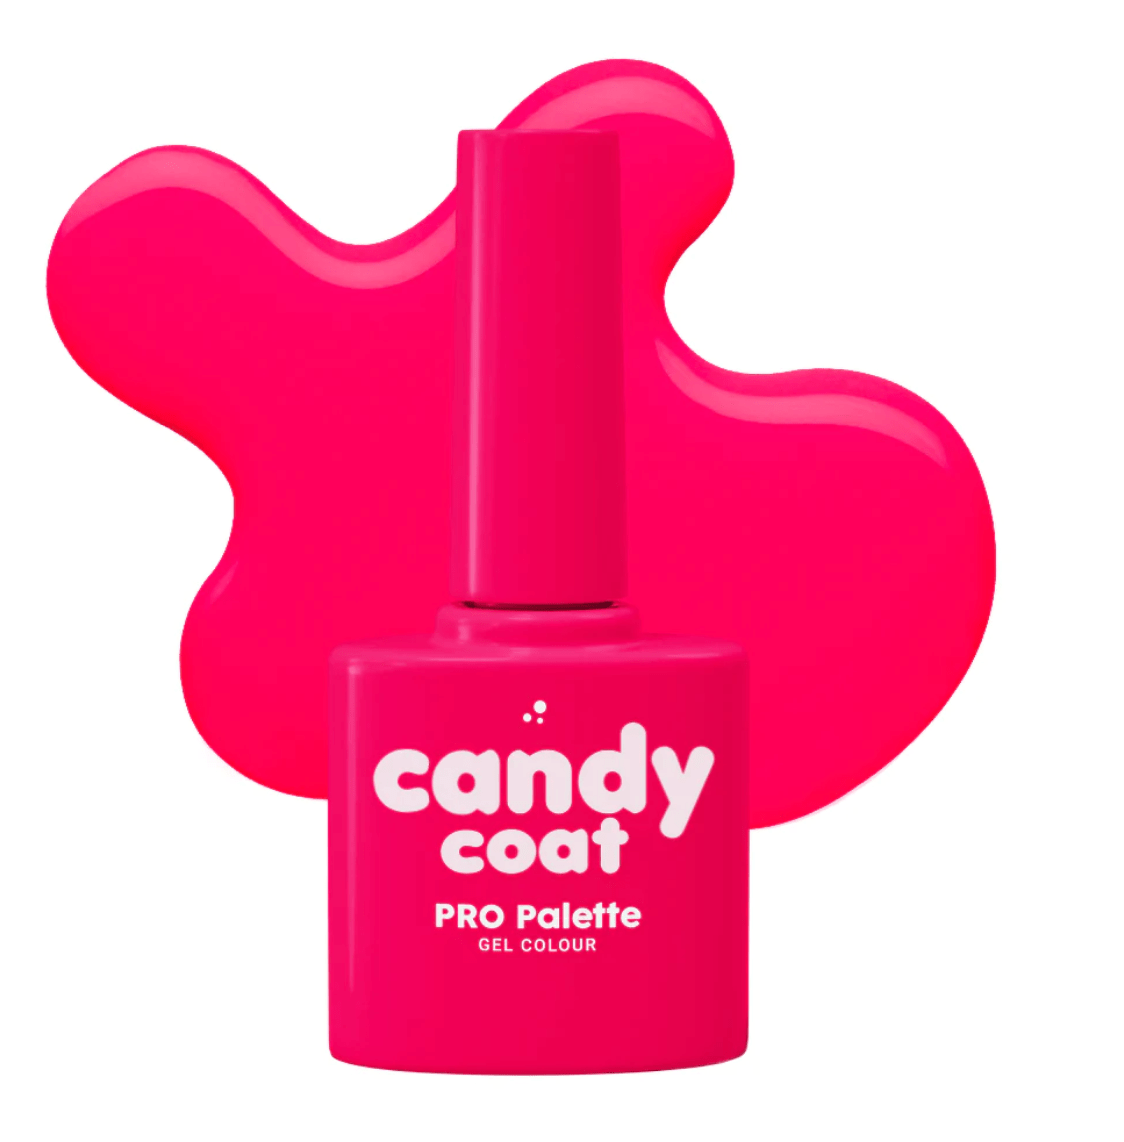 Candy Coat PRO Palette 1020 Priti